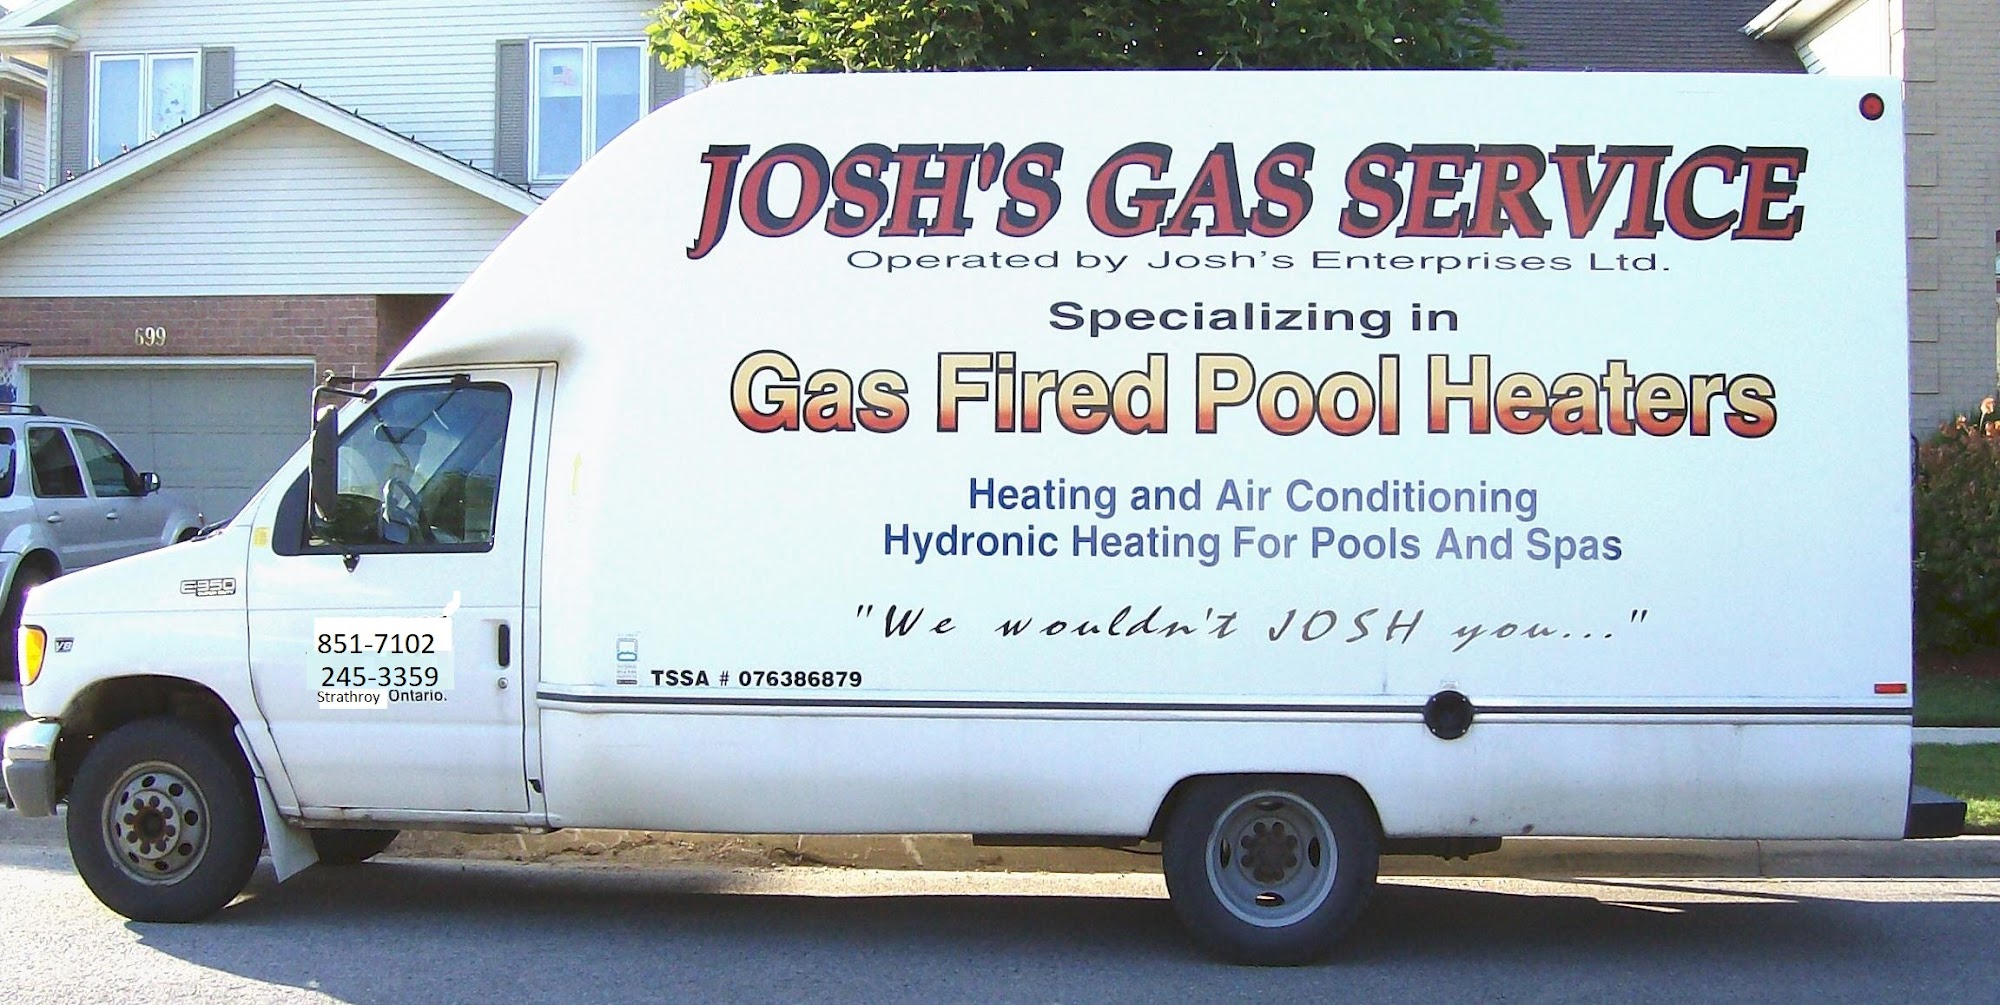 Josh's Gas Service